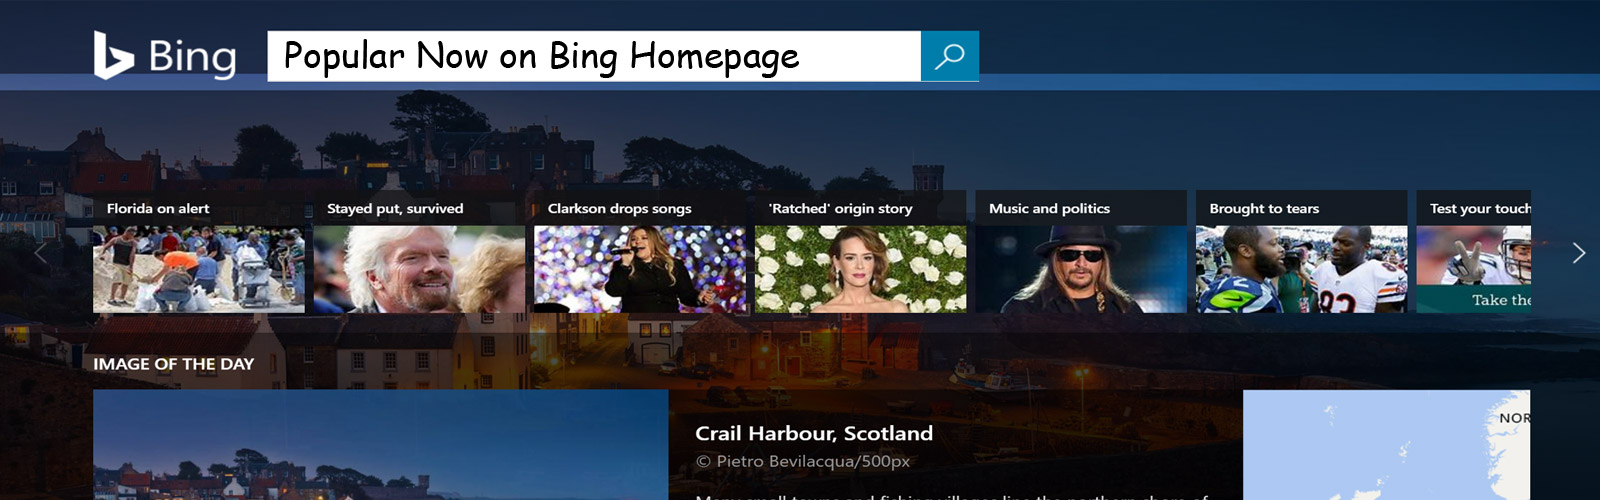 Popular-Now-on-Bing-Homepage